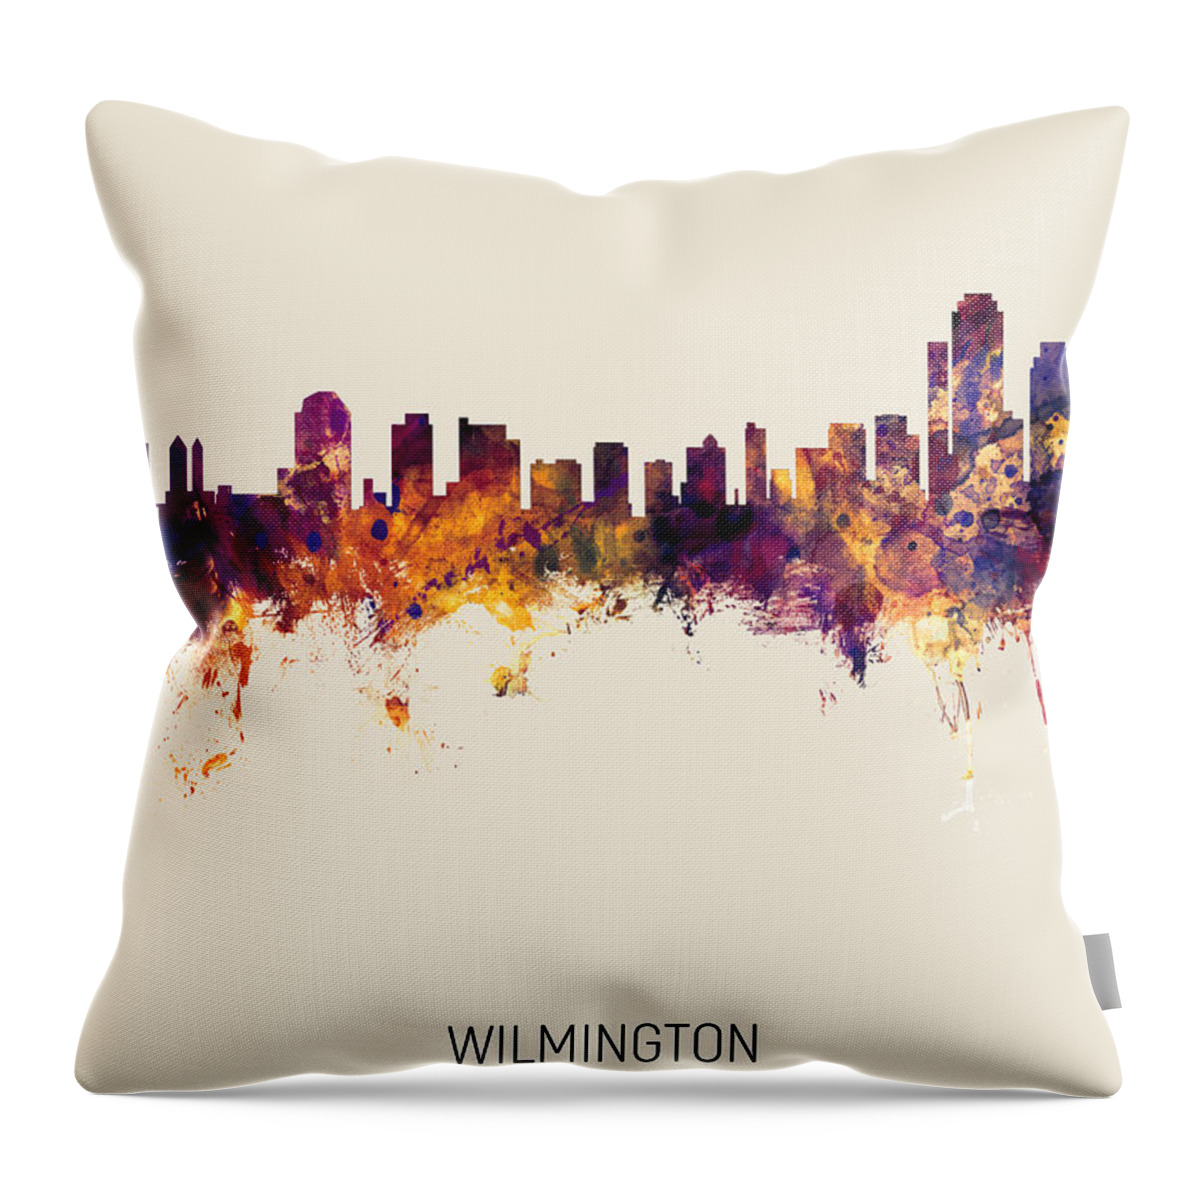 Wilmington Throw Pillow featuring the digital art Wilmington Delaware Skyline #7 by Michael Tompsett